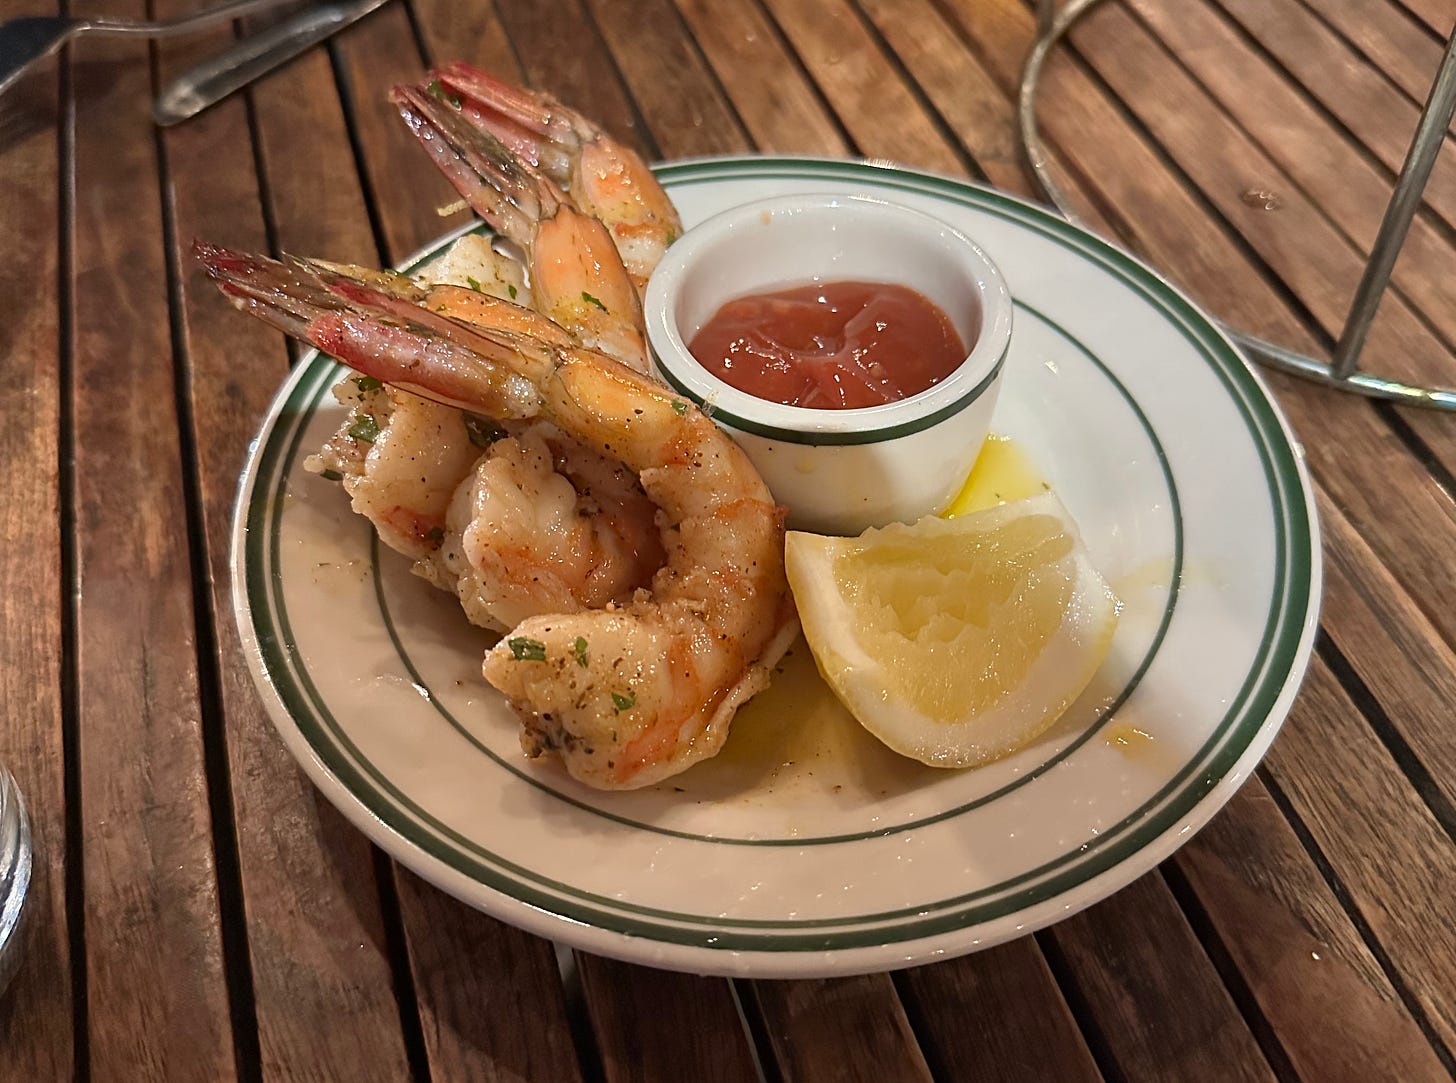 L & E Oyster Bar's shrimp cocktail